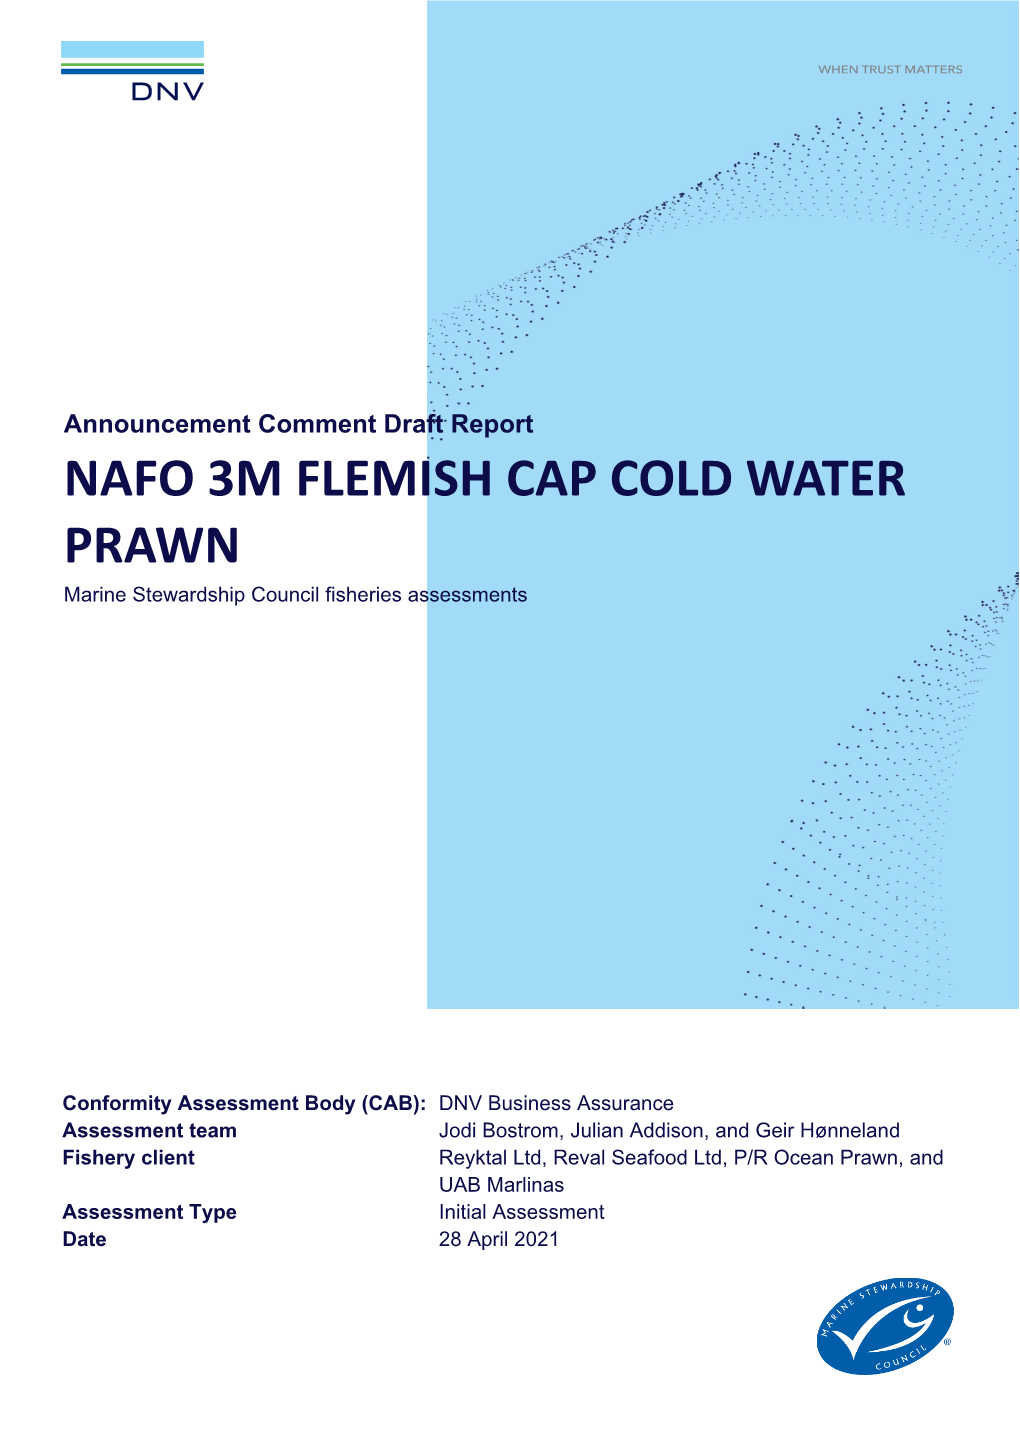 NAFO 3M FLEMISH CAP COLD WATER PRAWN Marine Stewardship Council Fisheries Assessments